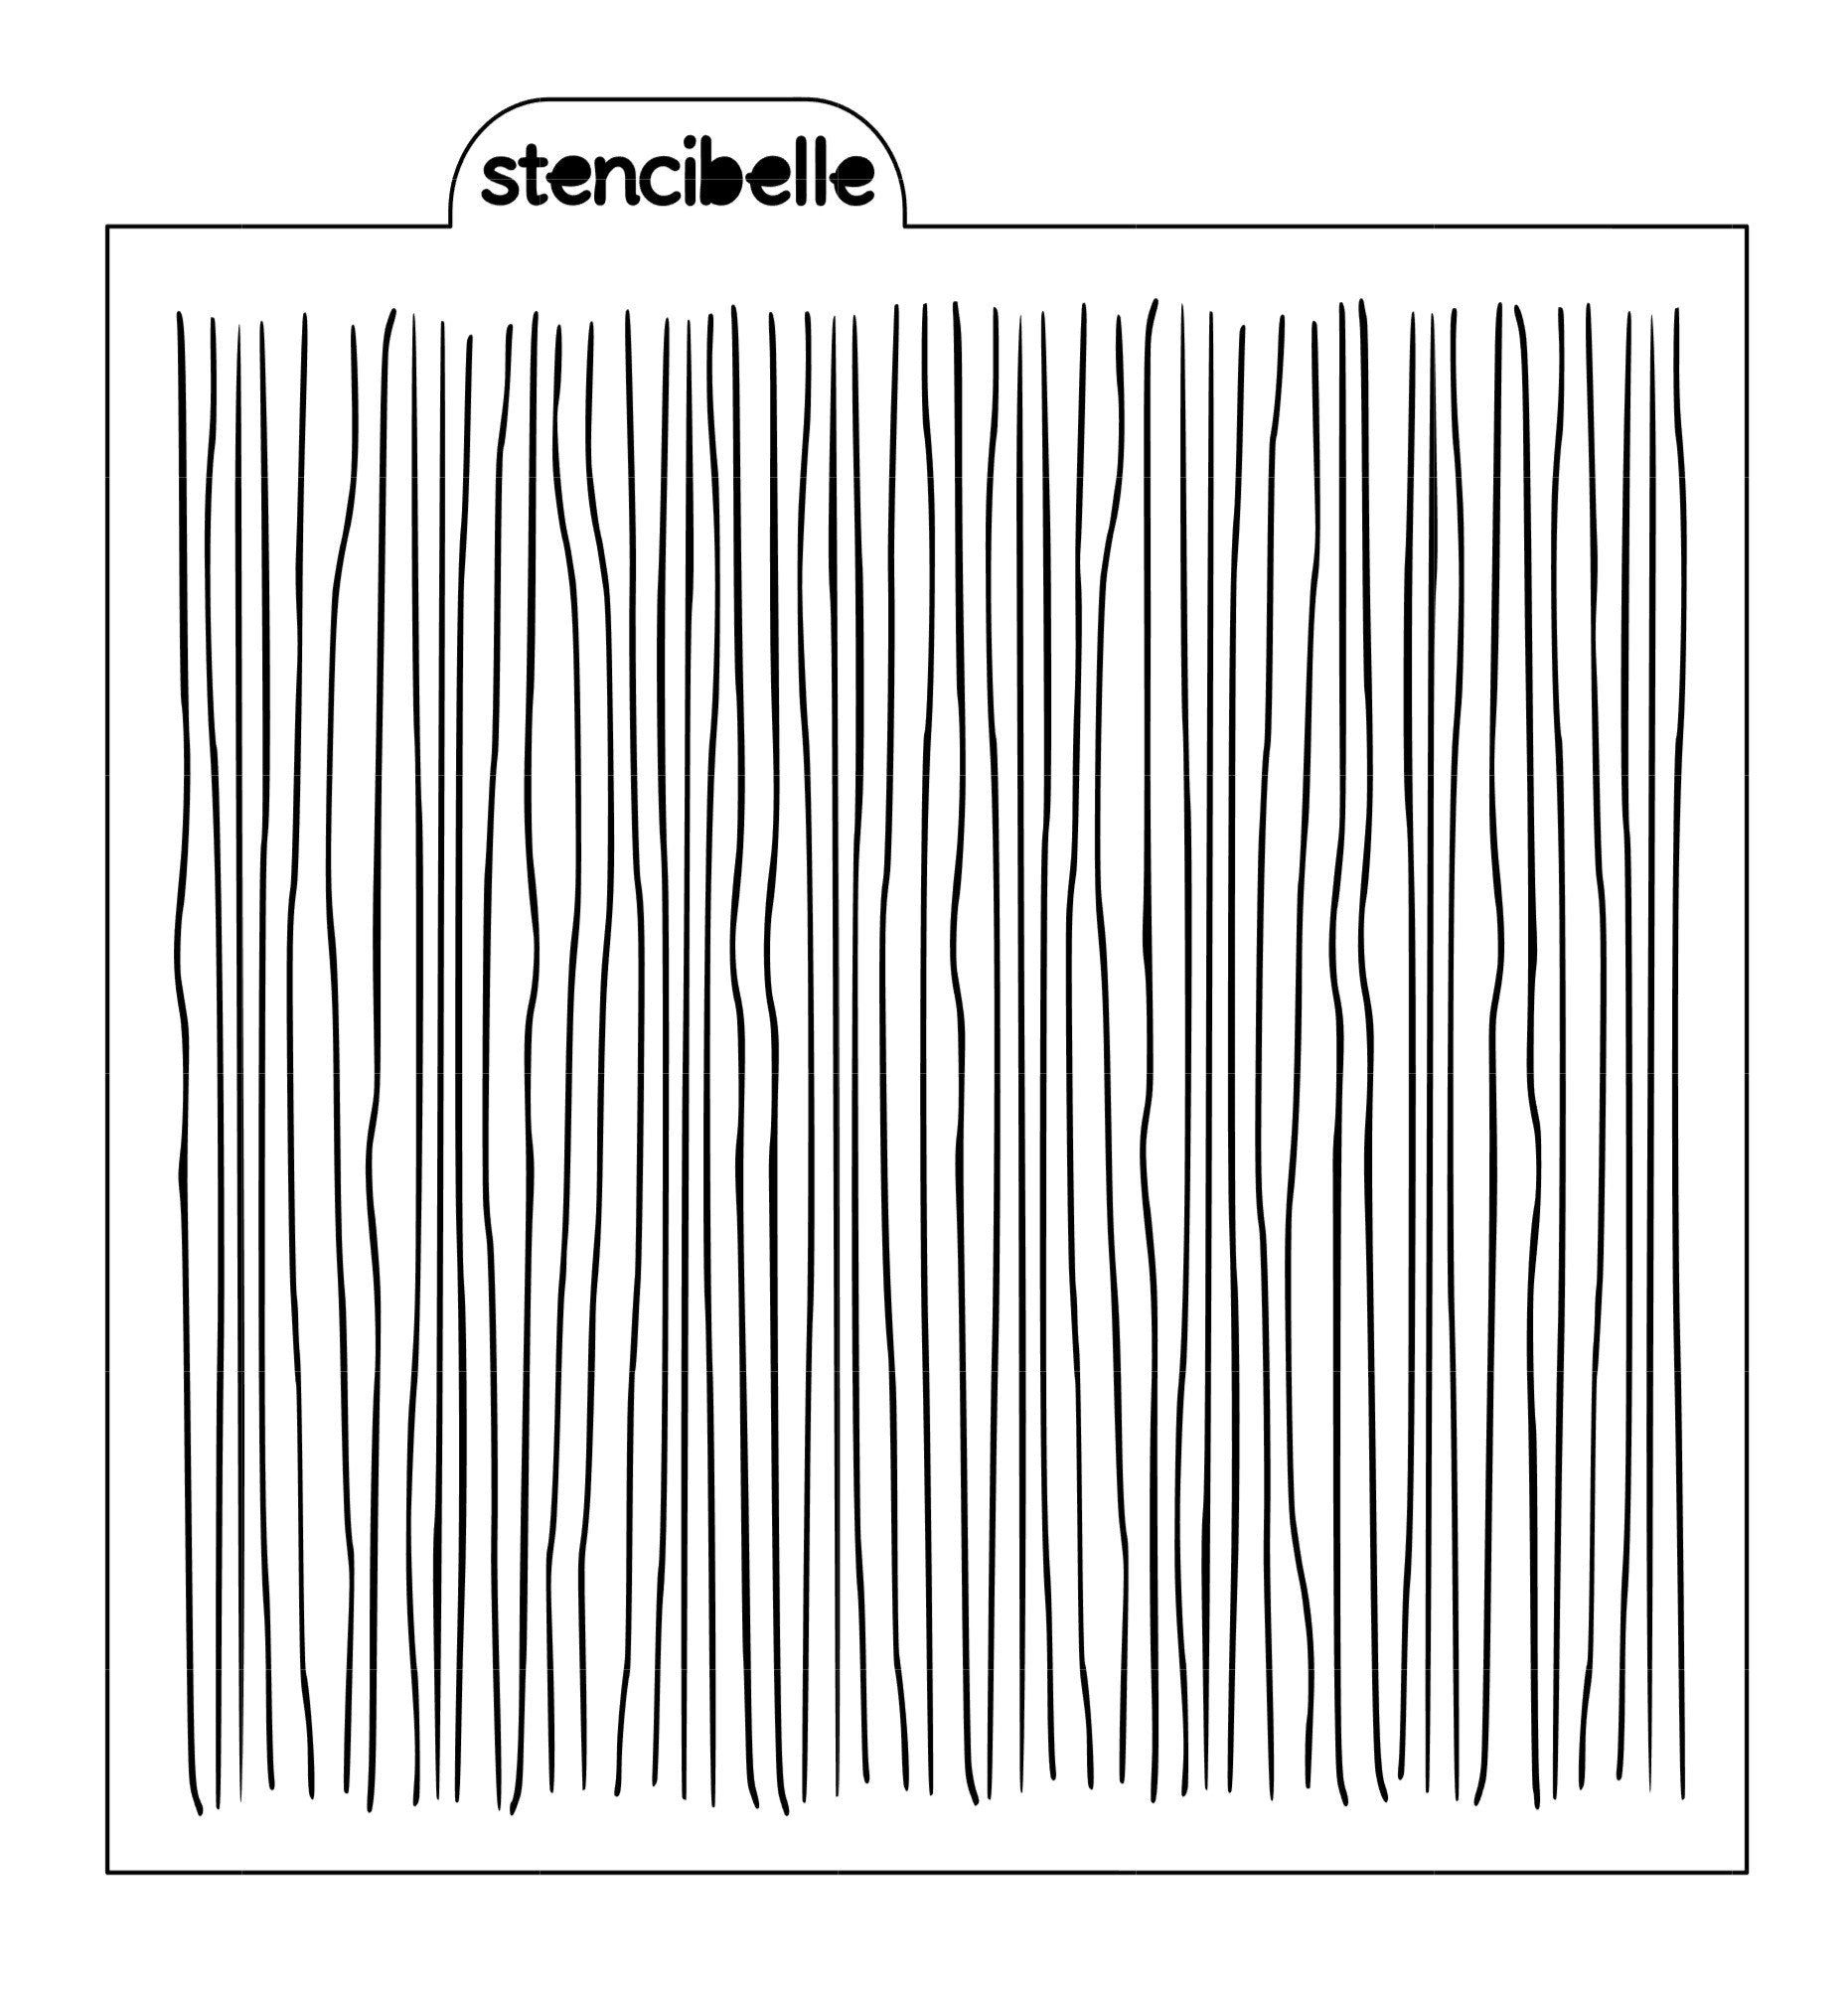 Letters Stencil Design - SVG FILE ONLY – stencibelle